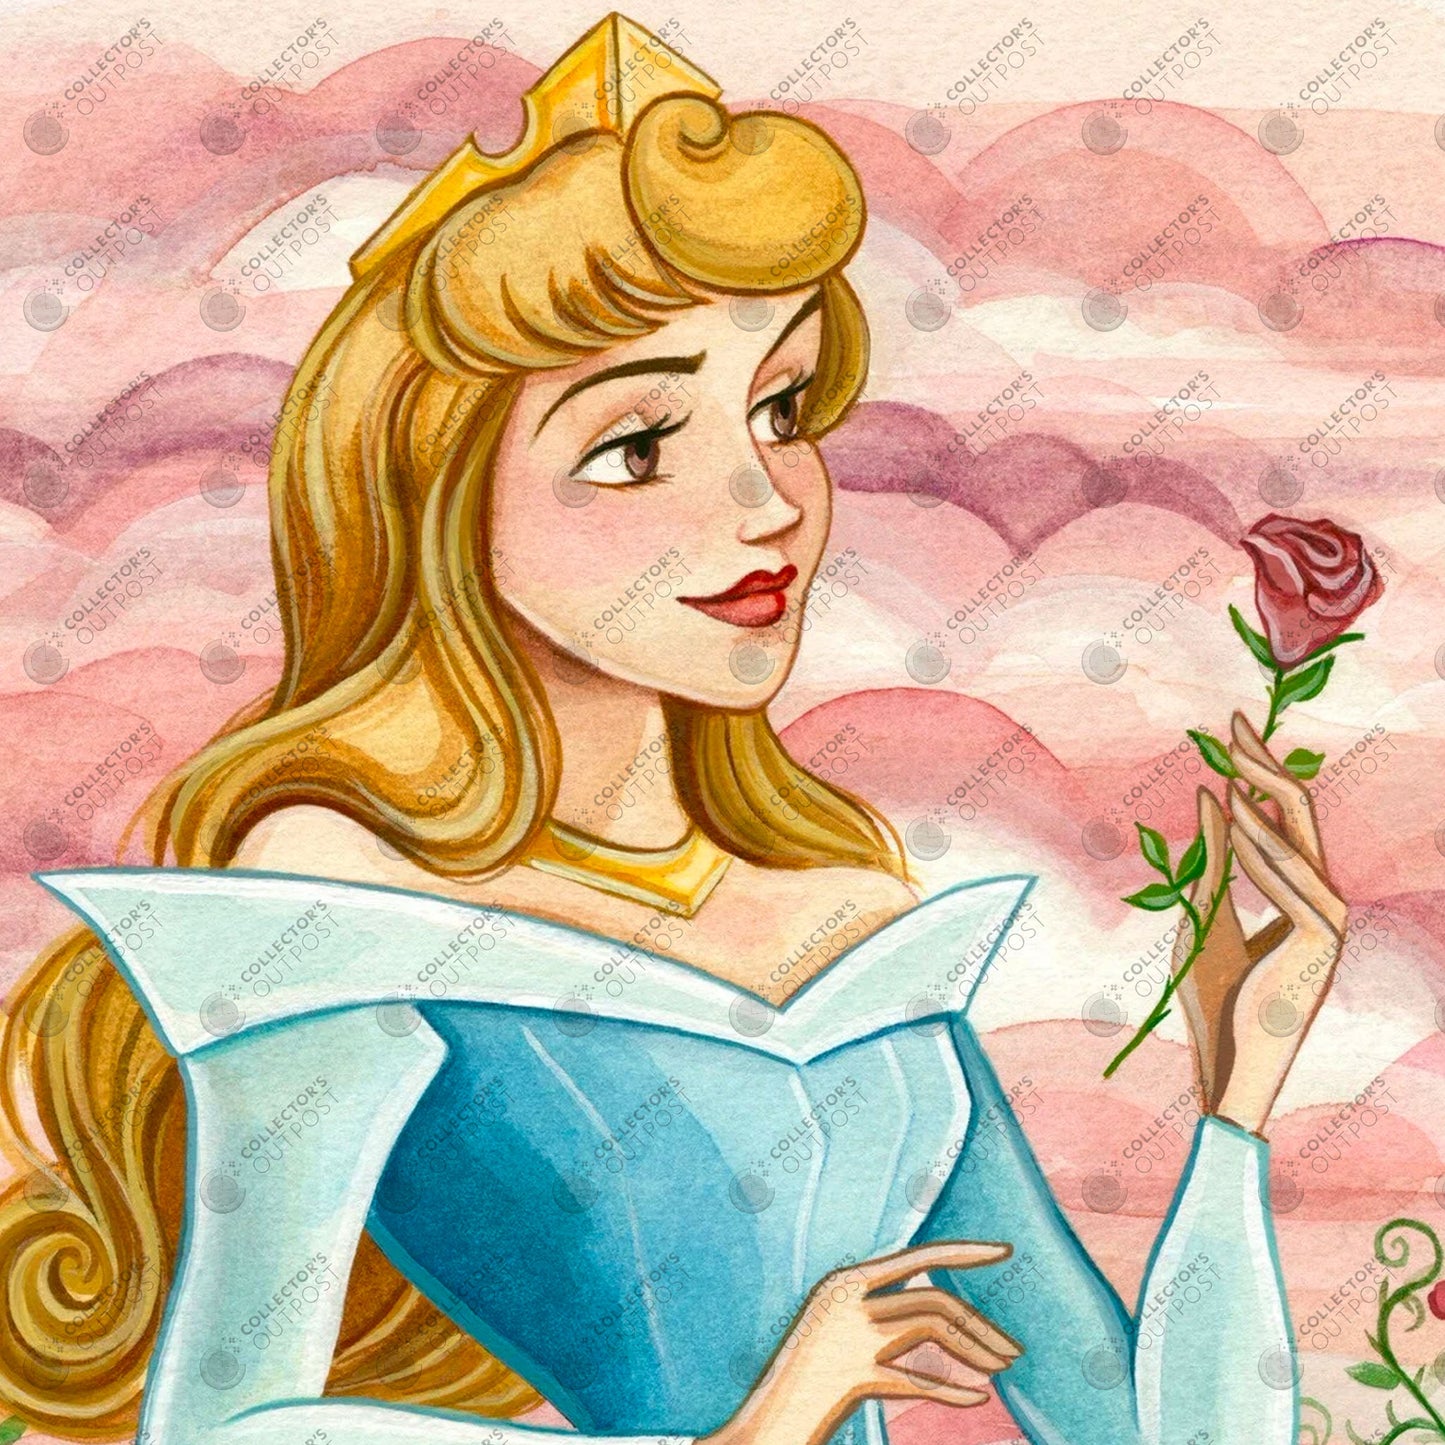 Disney Plush: Sleeping Beauty's Princess Aurora